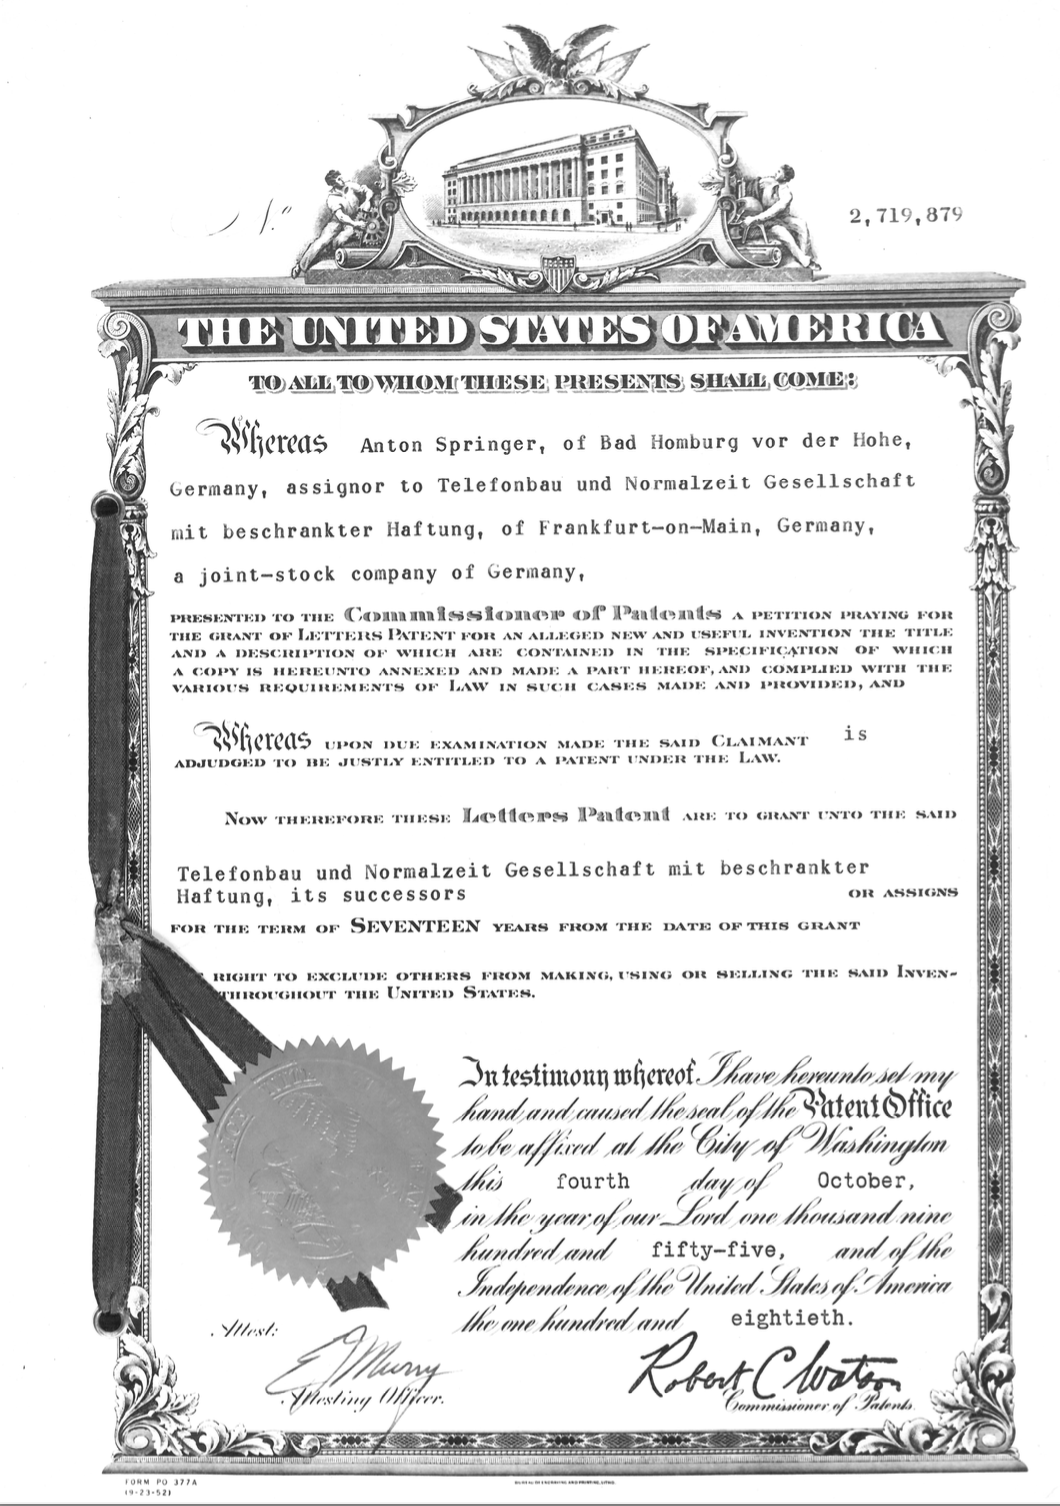 United States of America Patent Nr. 2,719,879